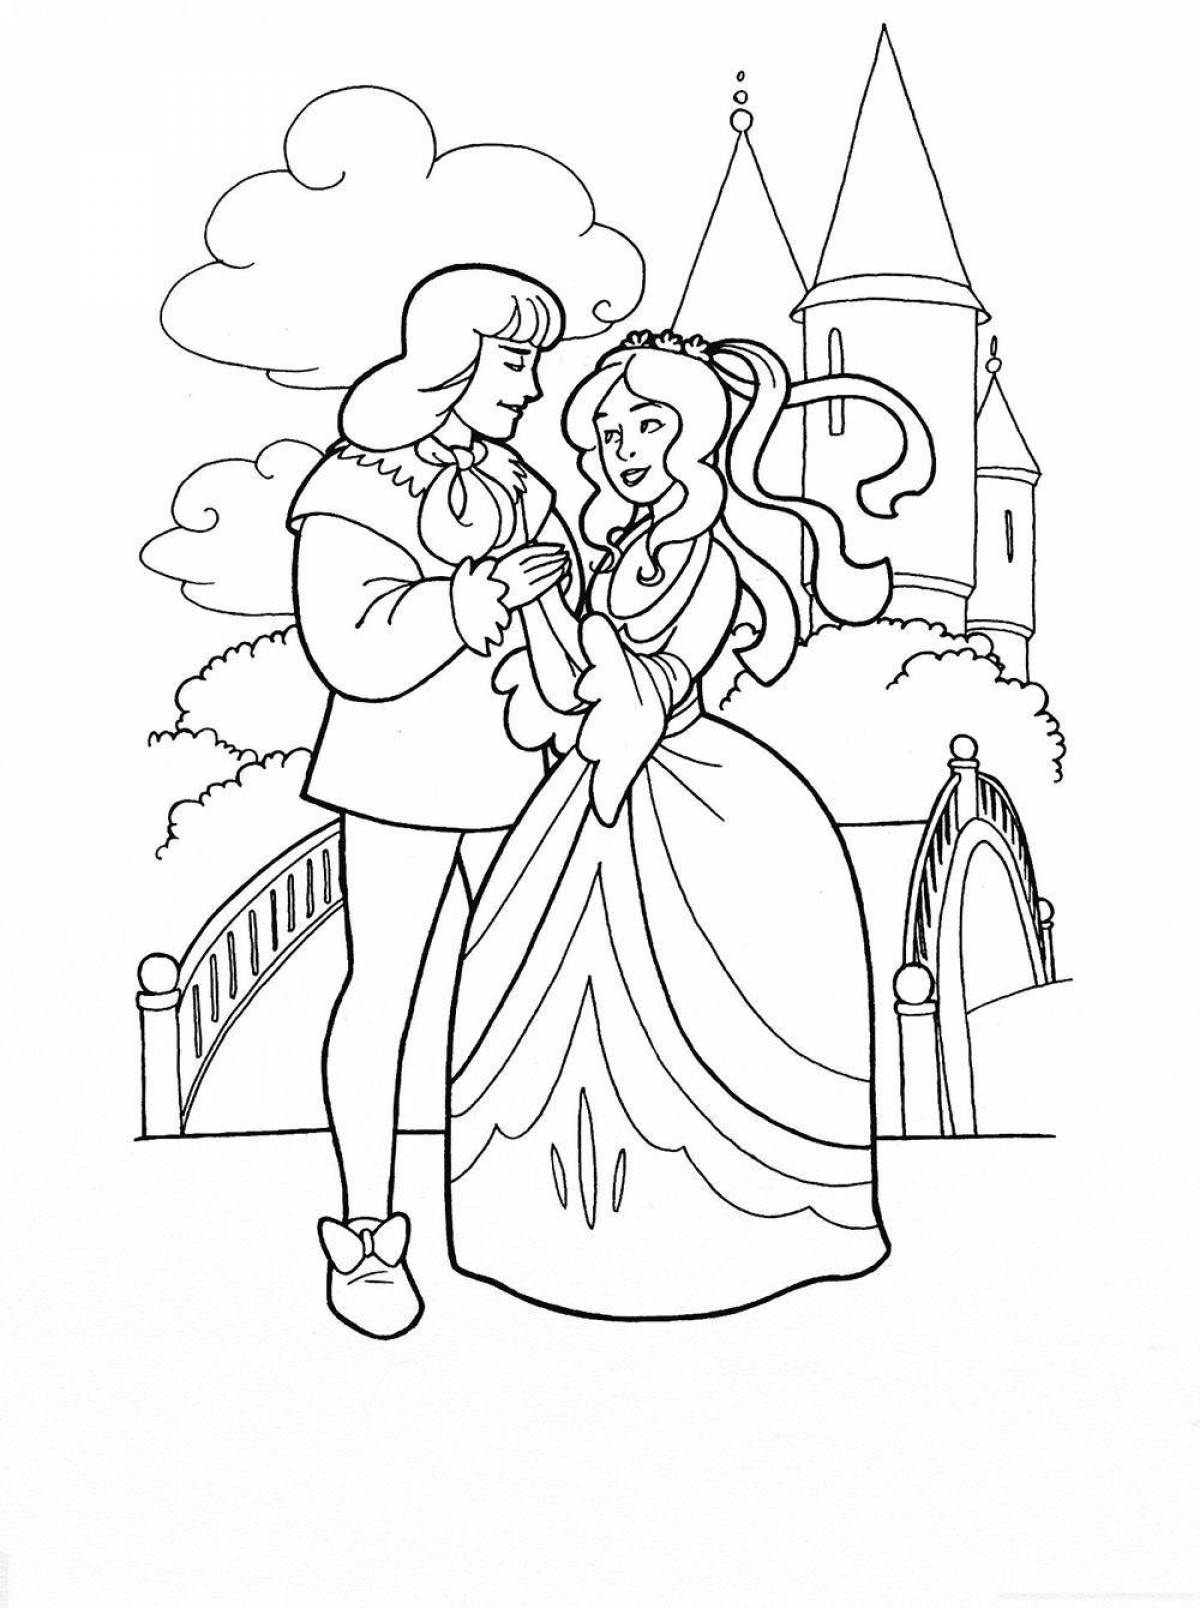 Adorable prince and princess coloring book